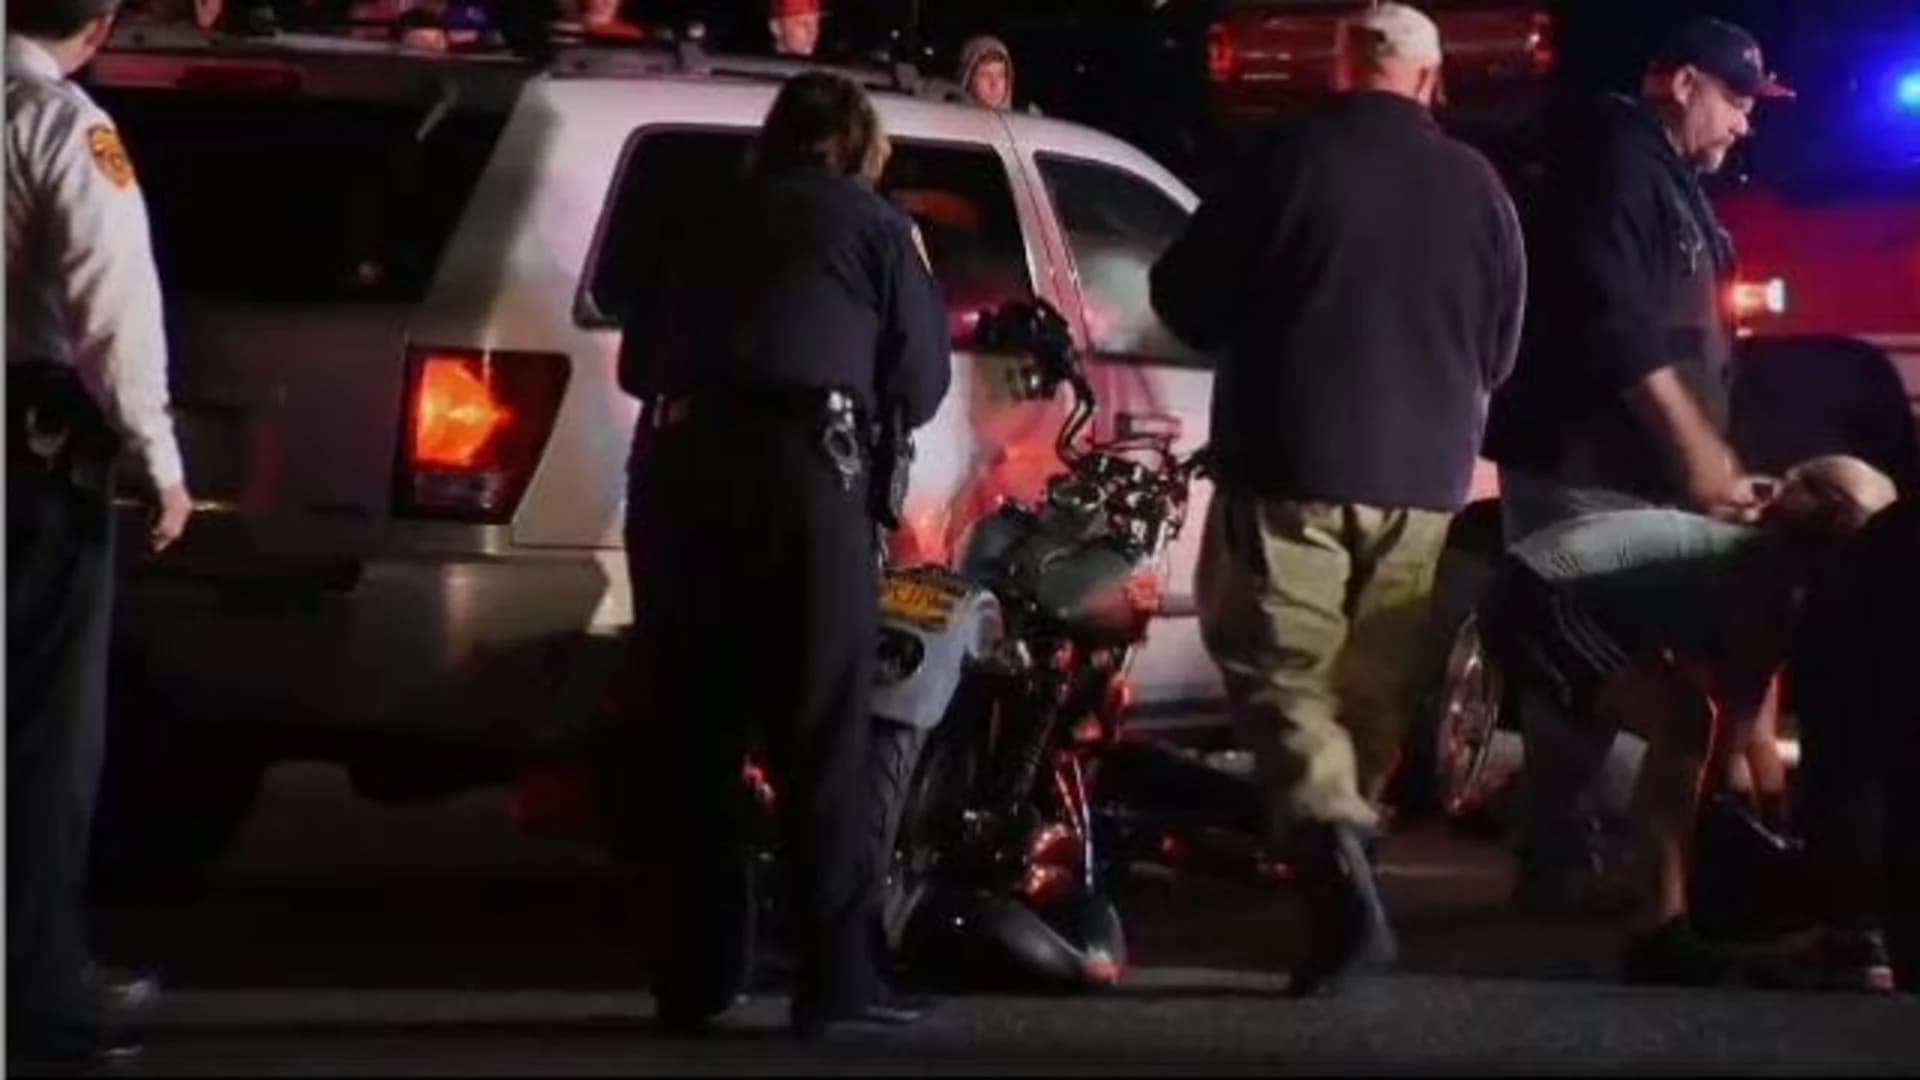 Man arrested for DWI after fatal motorcycle crash in Selden